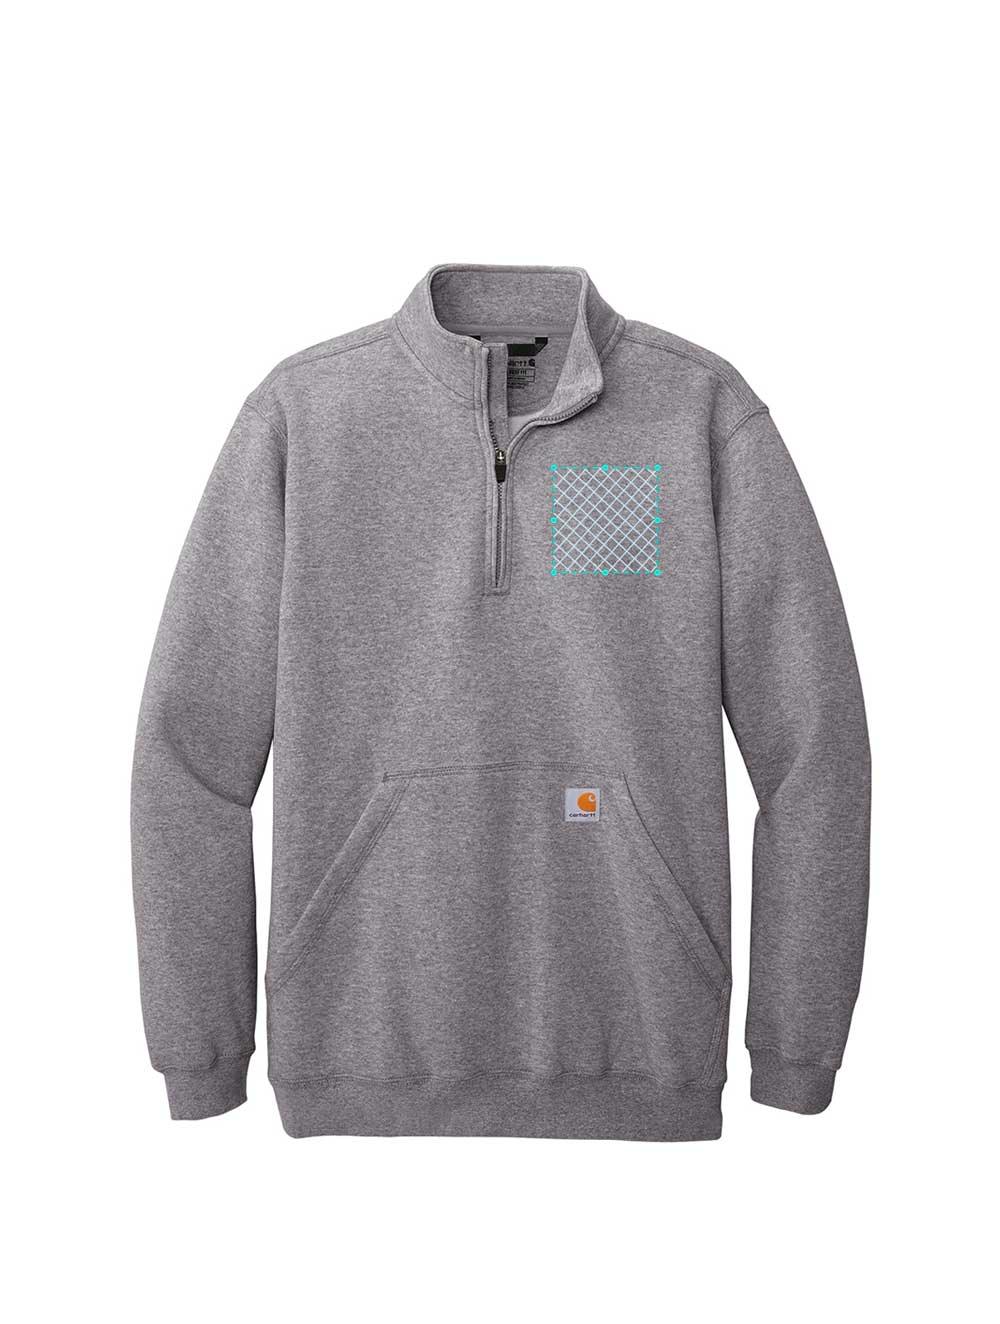 Embroidered Carhartt® Midweight 1/4-Zip Mock Neck Sweatshirt - Constantly Create Shop